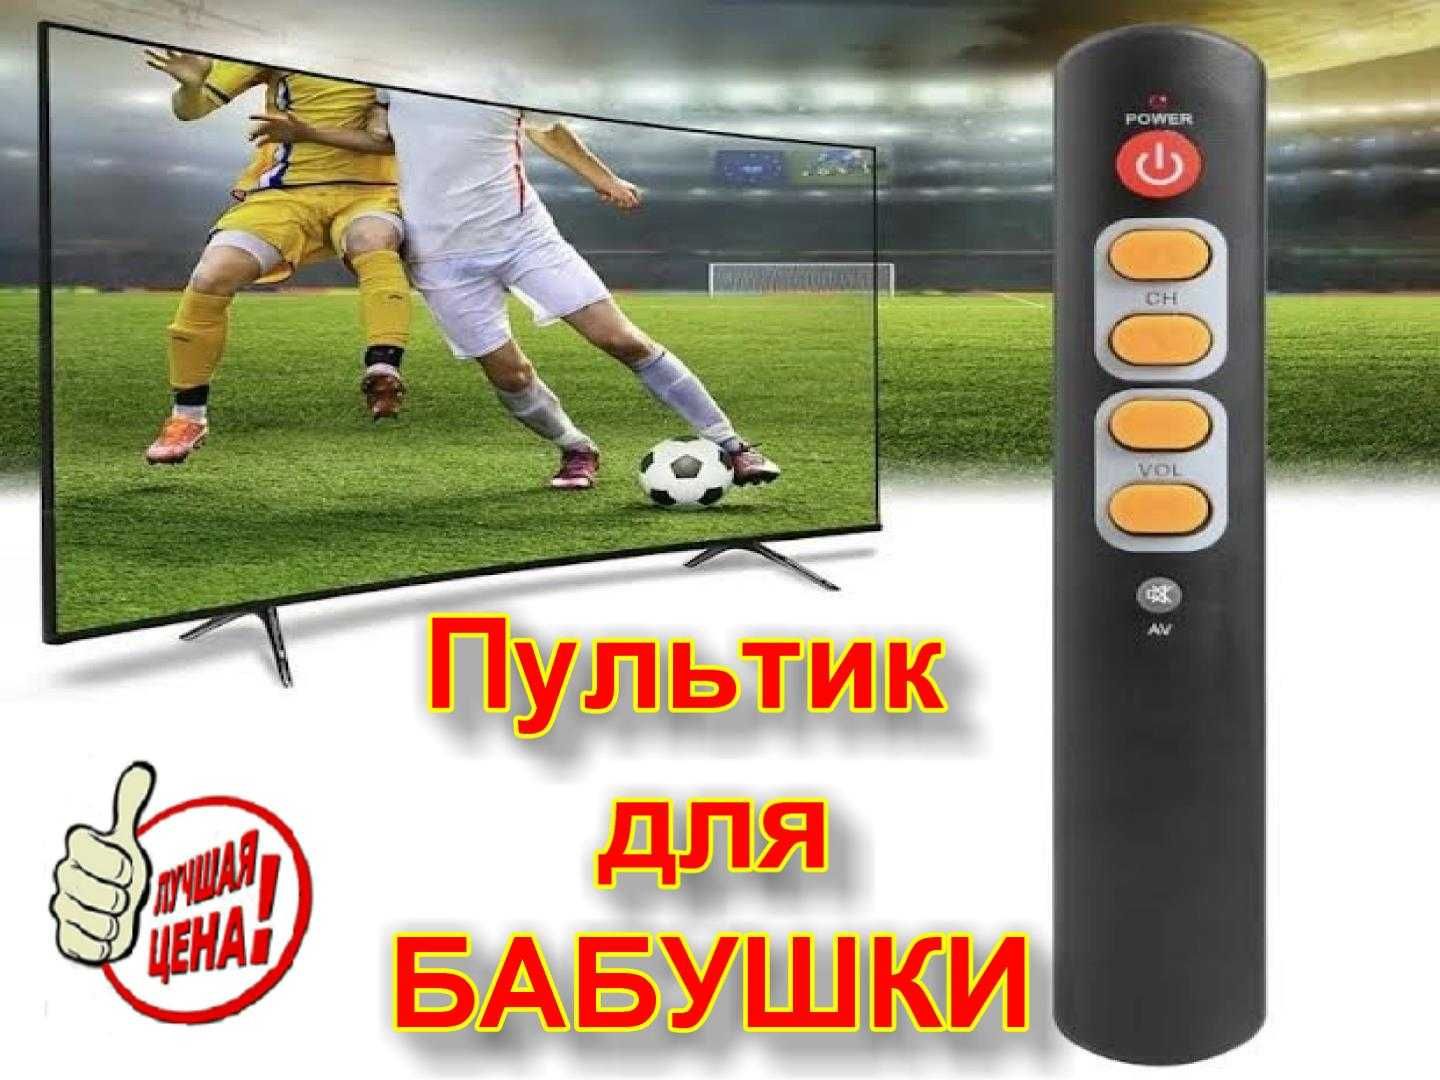 ‼️ИК пульт‼️ (программируемый) STB DVD DVB TV Box  LG Samsung Philips